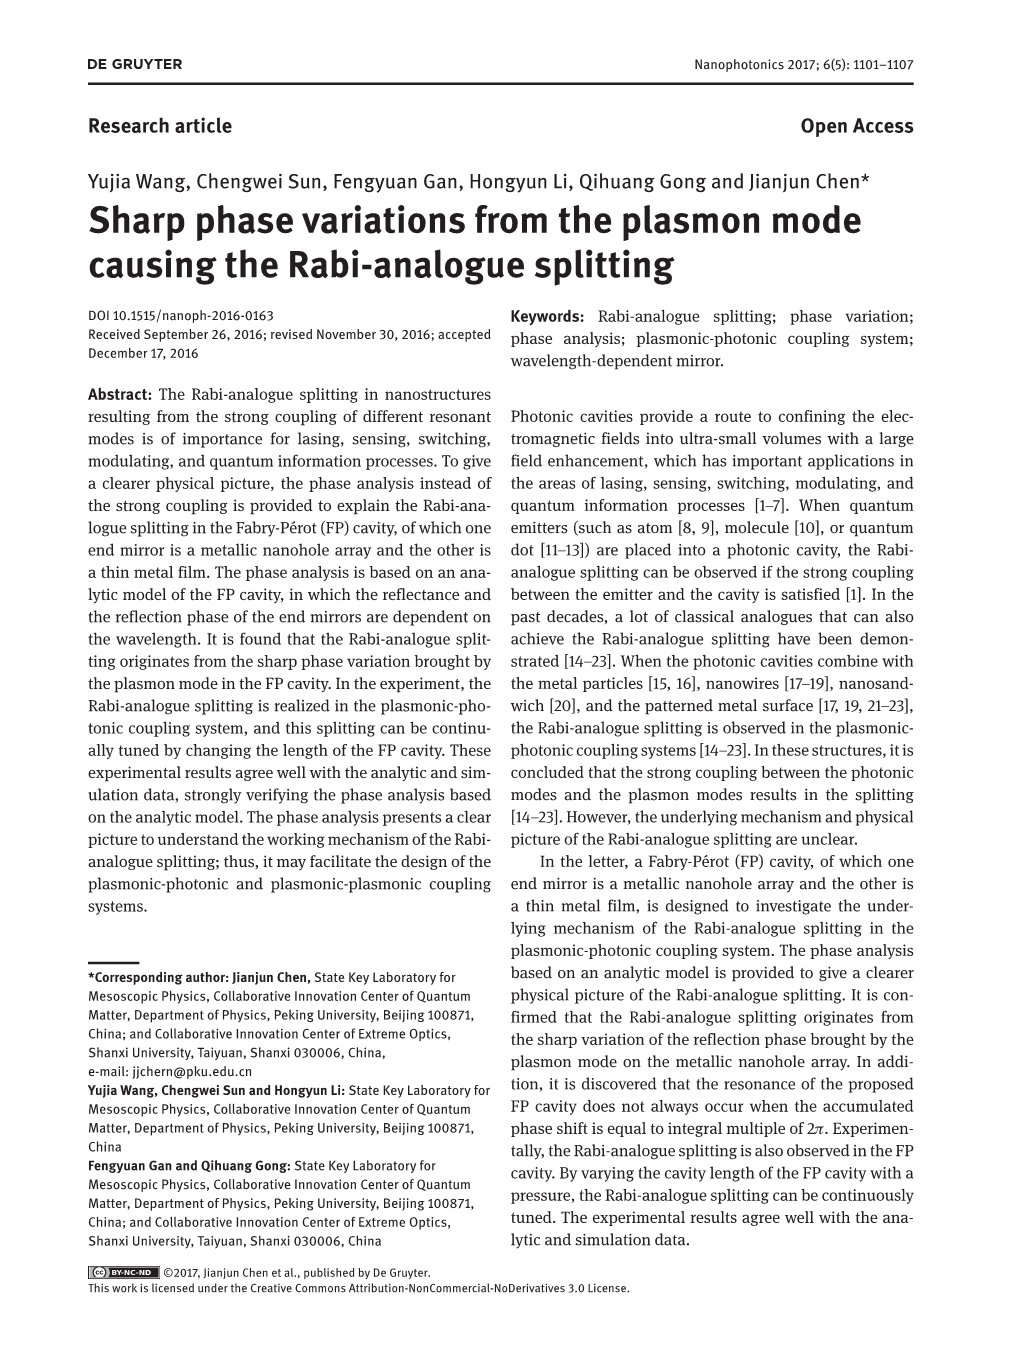 Sharp Phase Variations from the Plasmon Mode Causing the Rabi-Analogue Splitting